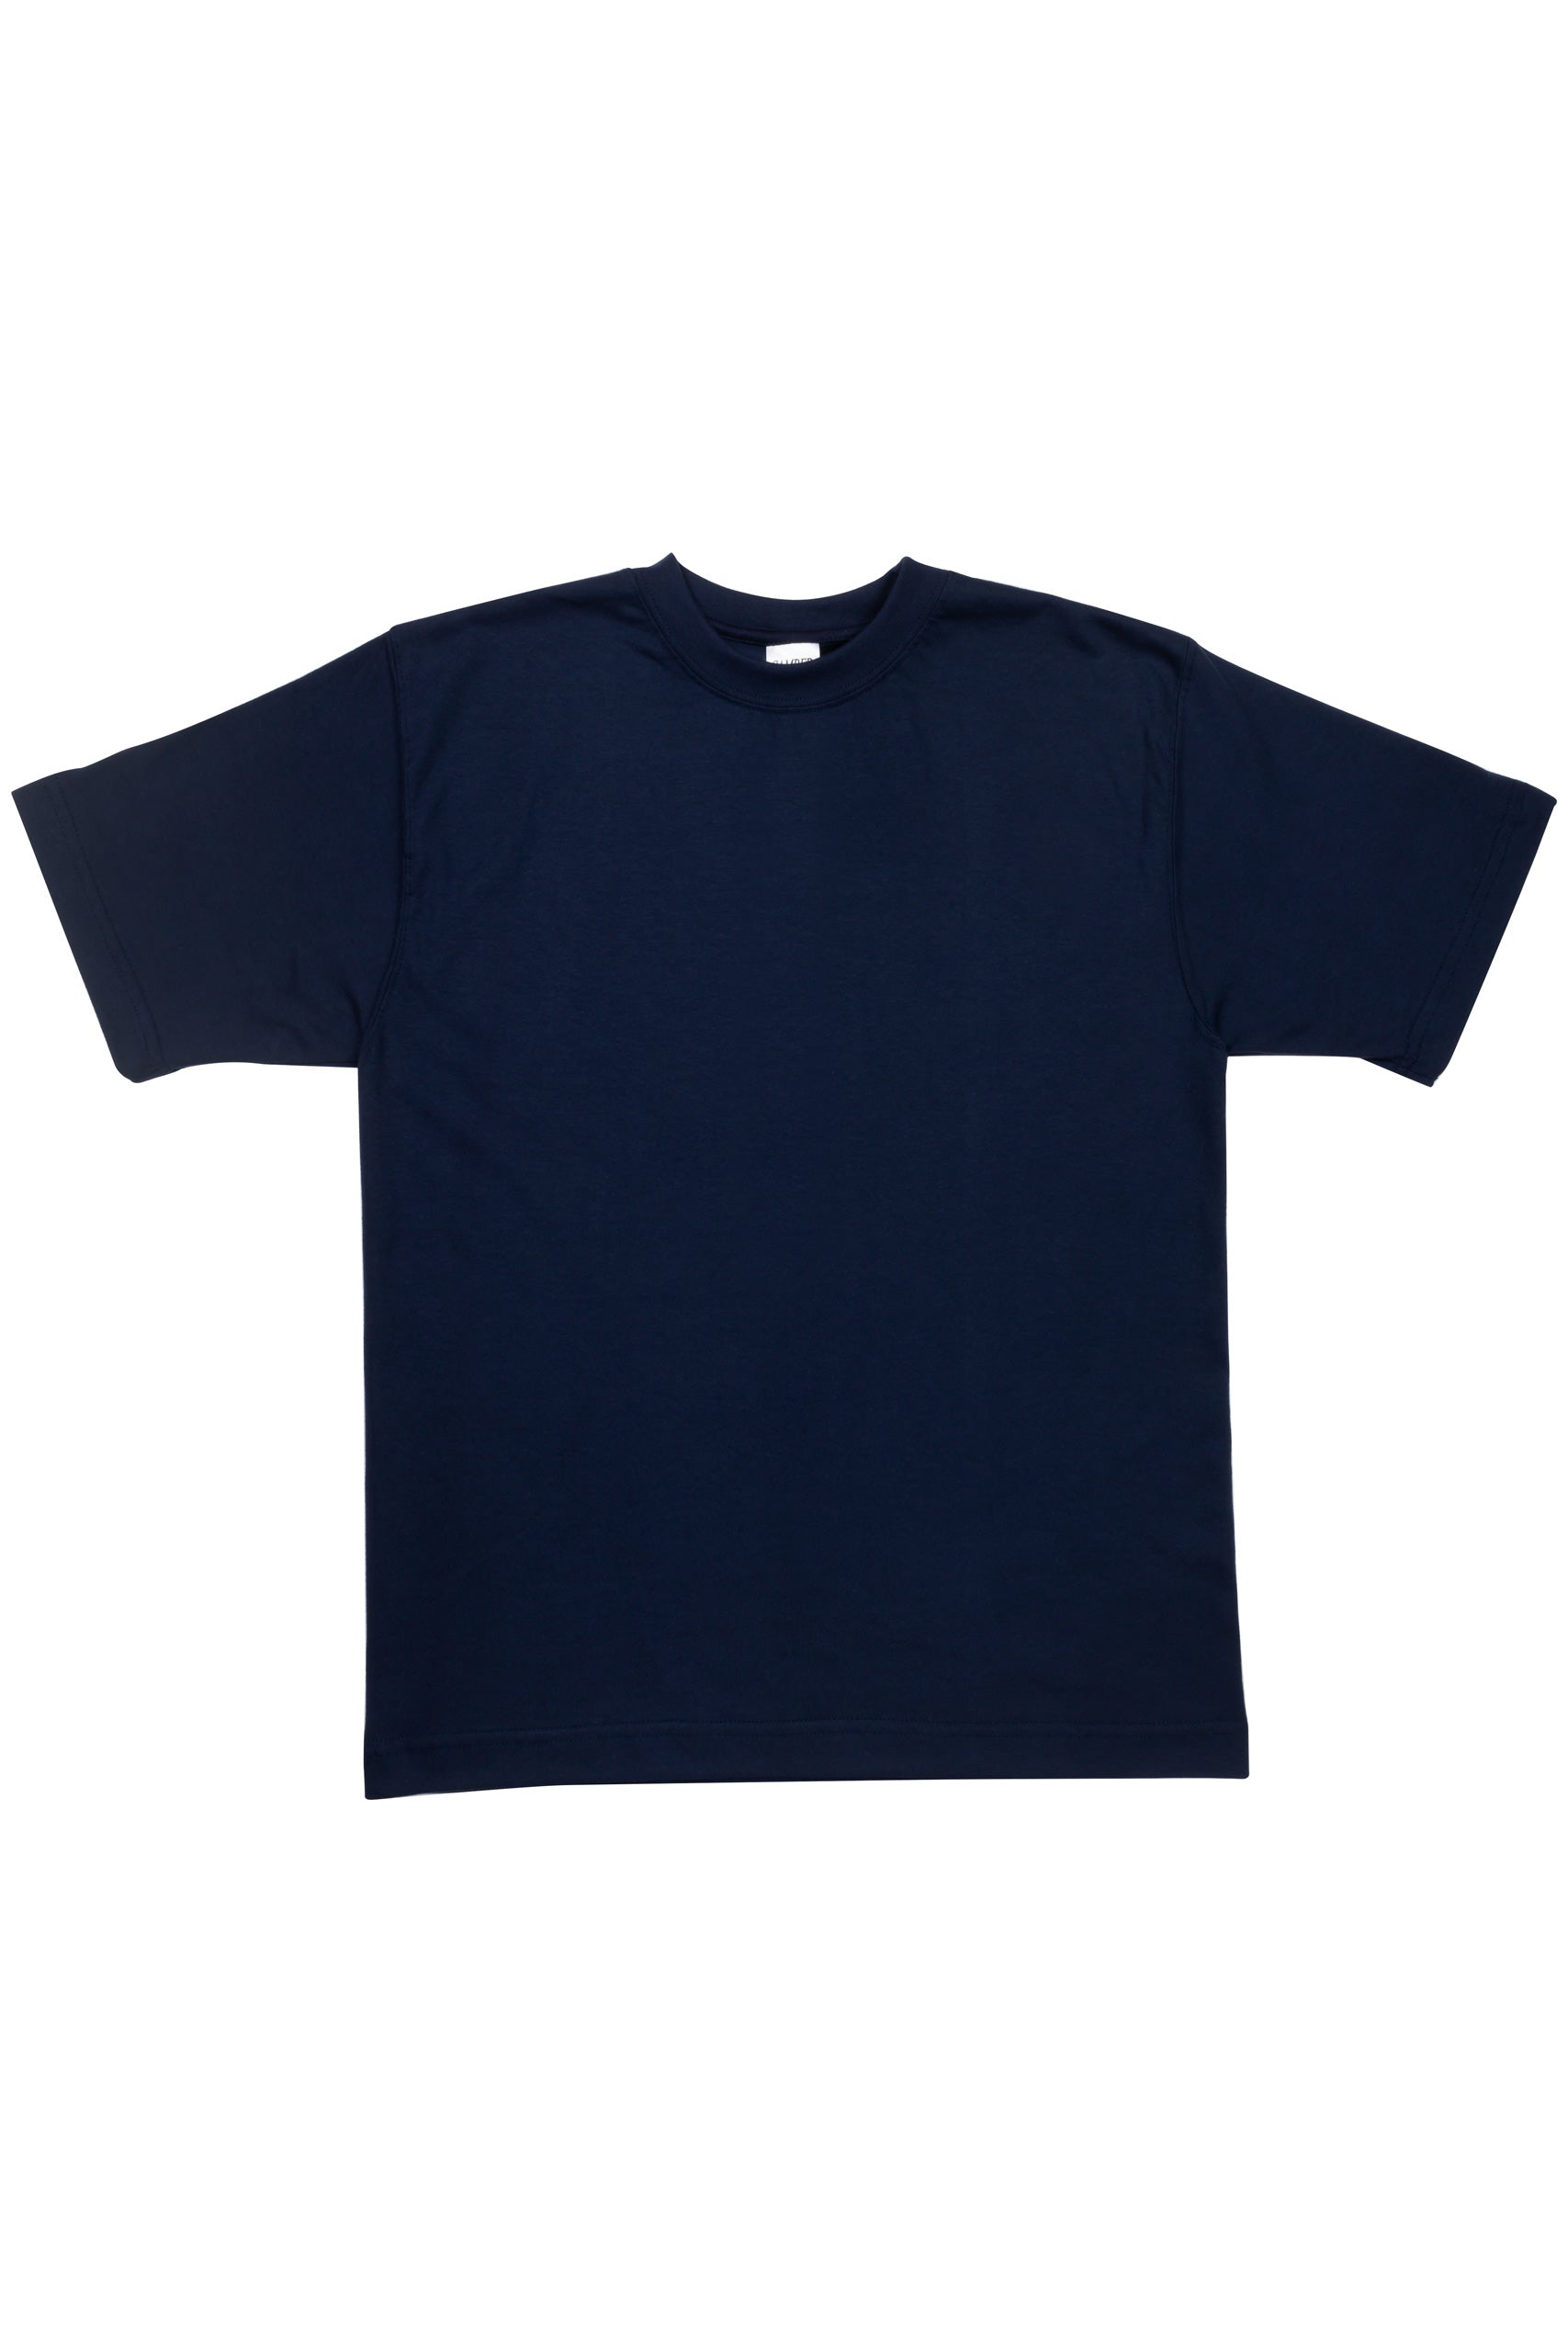 Camber USA Navy 701 6oz T-Shirt – Embark Clothiers